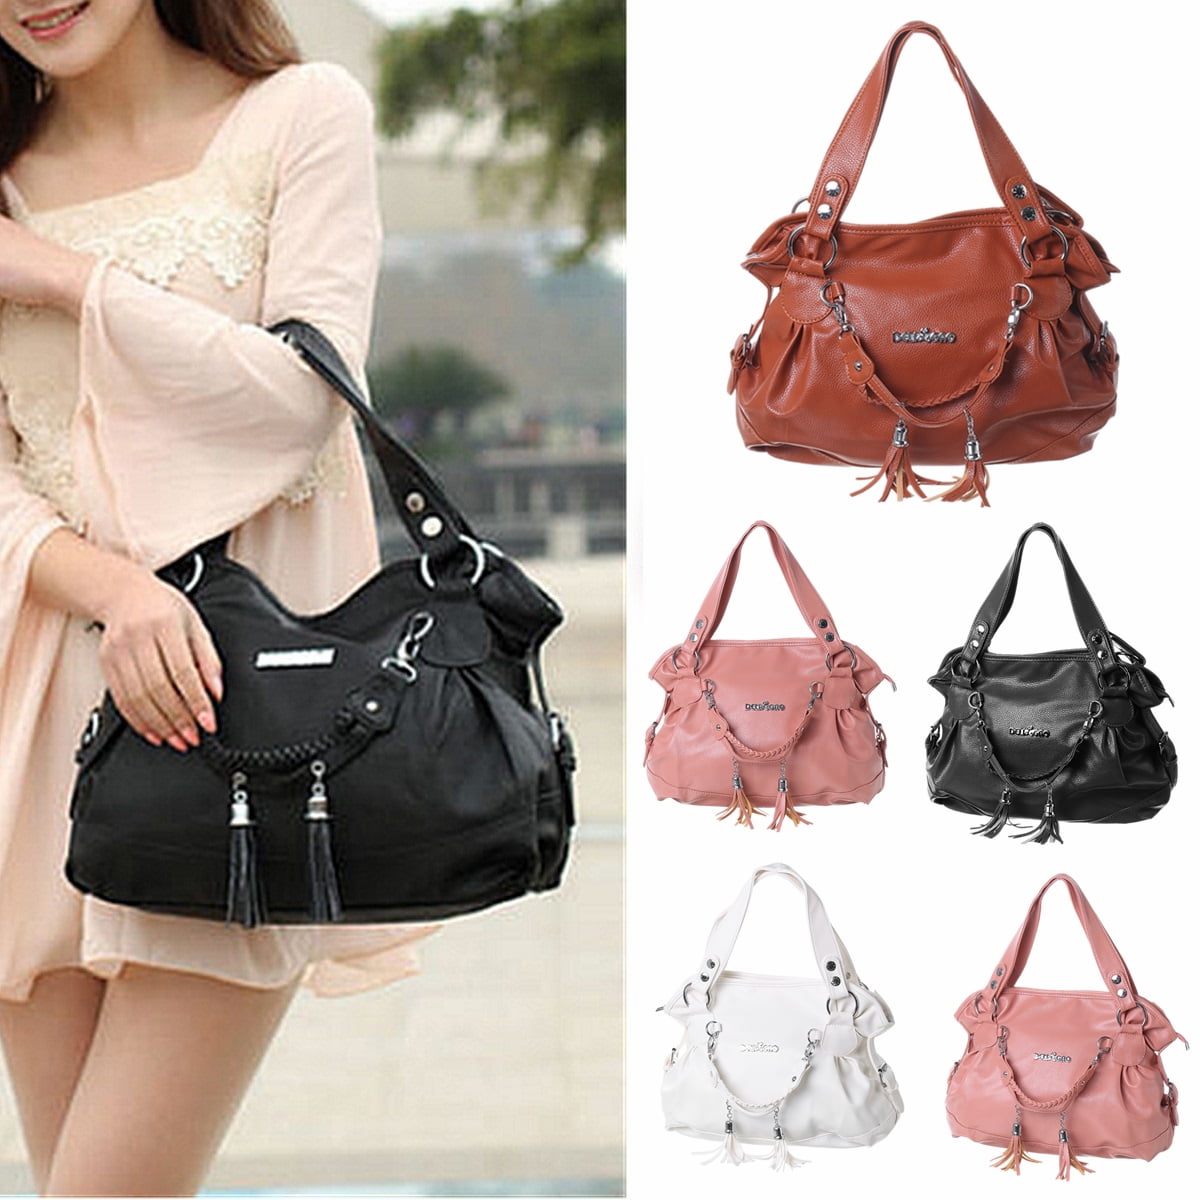 Bird Leather Top Handle Satchel Girl Handbag Shoulder Tote Bag for Girls Women